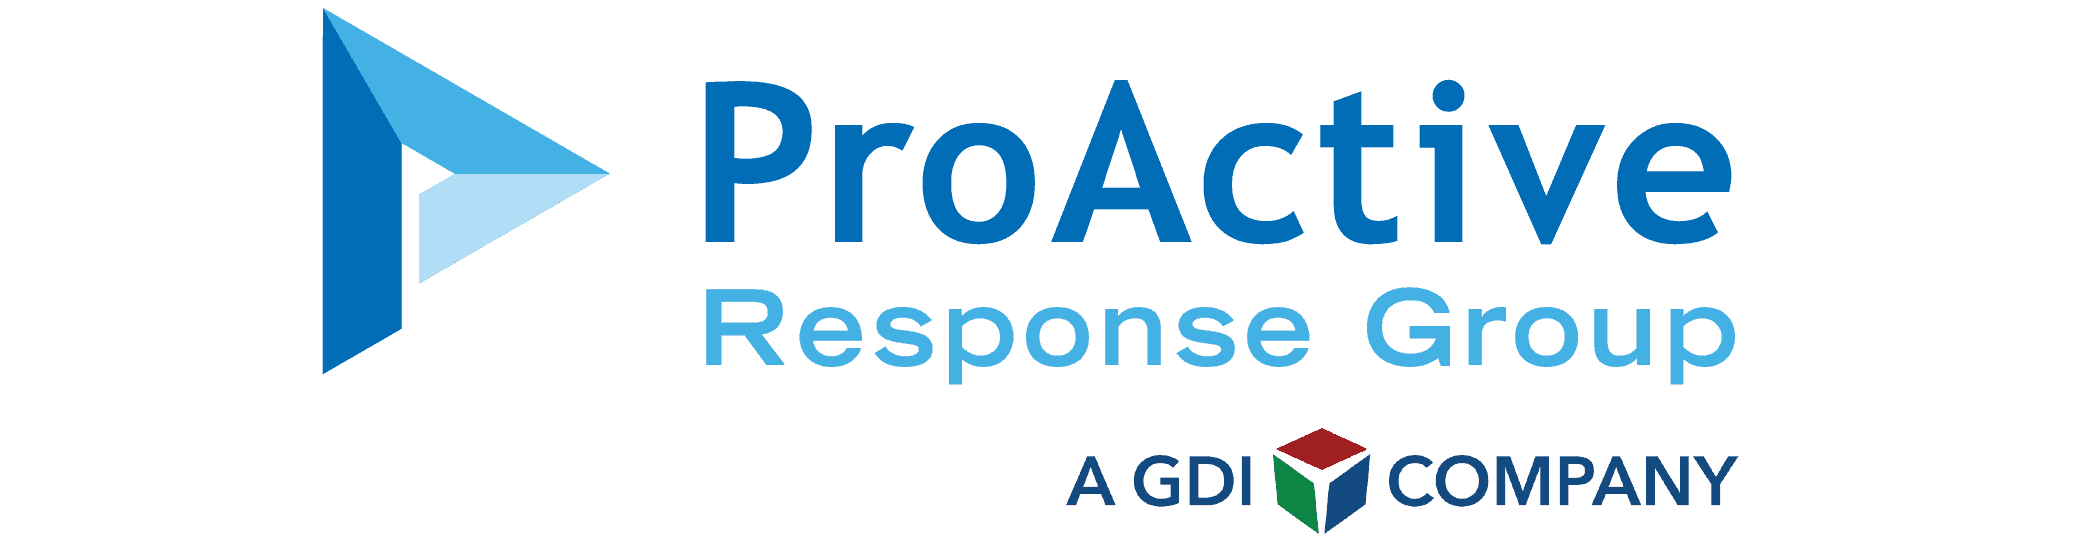 Proactive RG logo